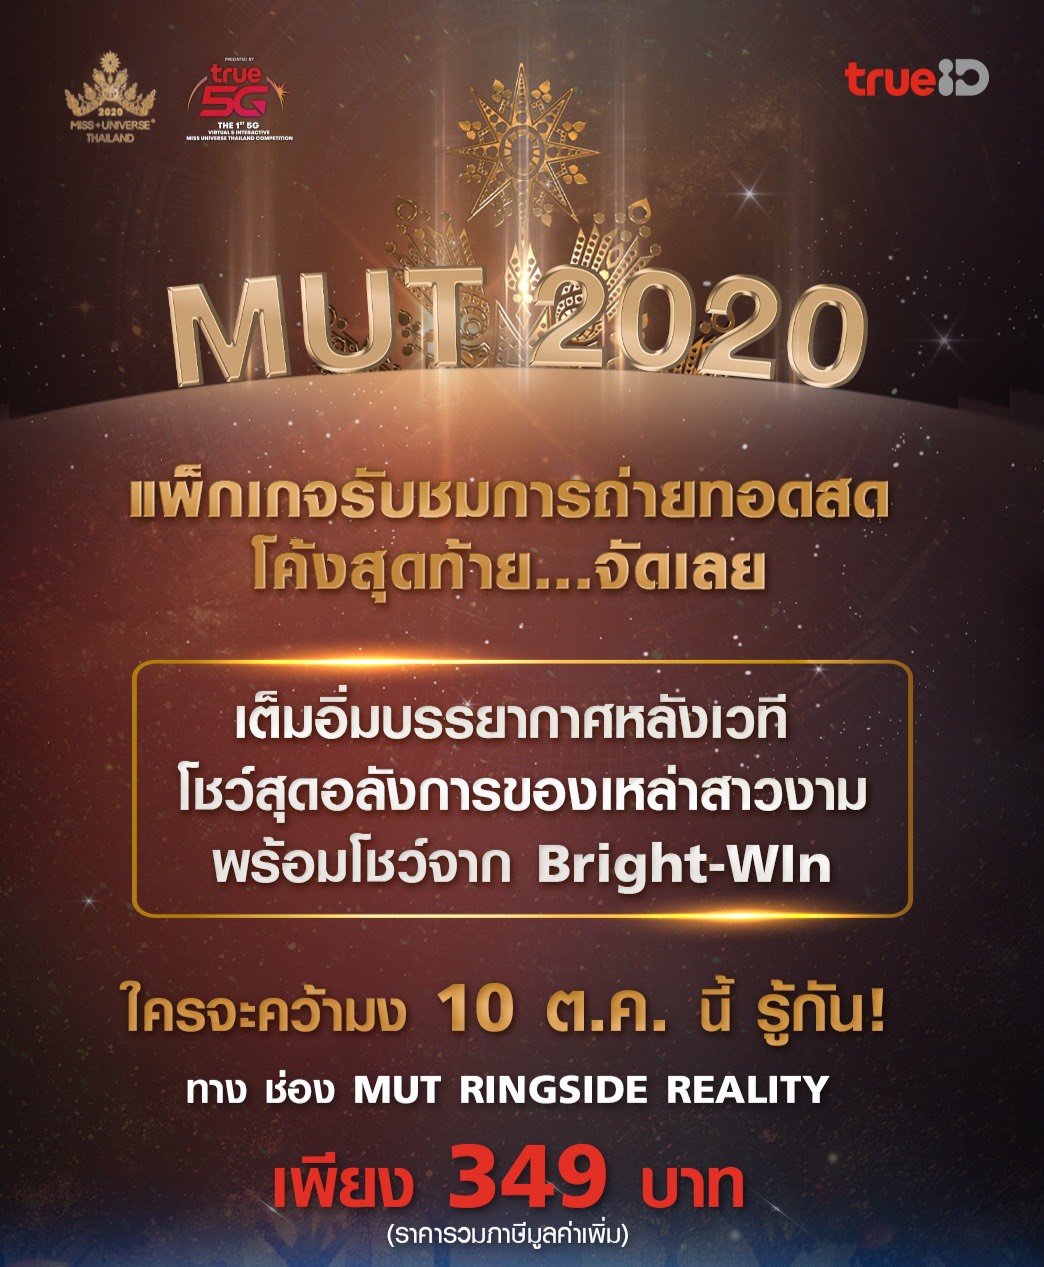 TrueID เปิดแพ็กเกจรับชม Miss Universe Thailand 2020 รอบ Final Competition ดูได้ครบทุกแพลตฟอร์ม เพียง 349 บาท